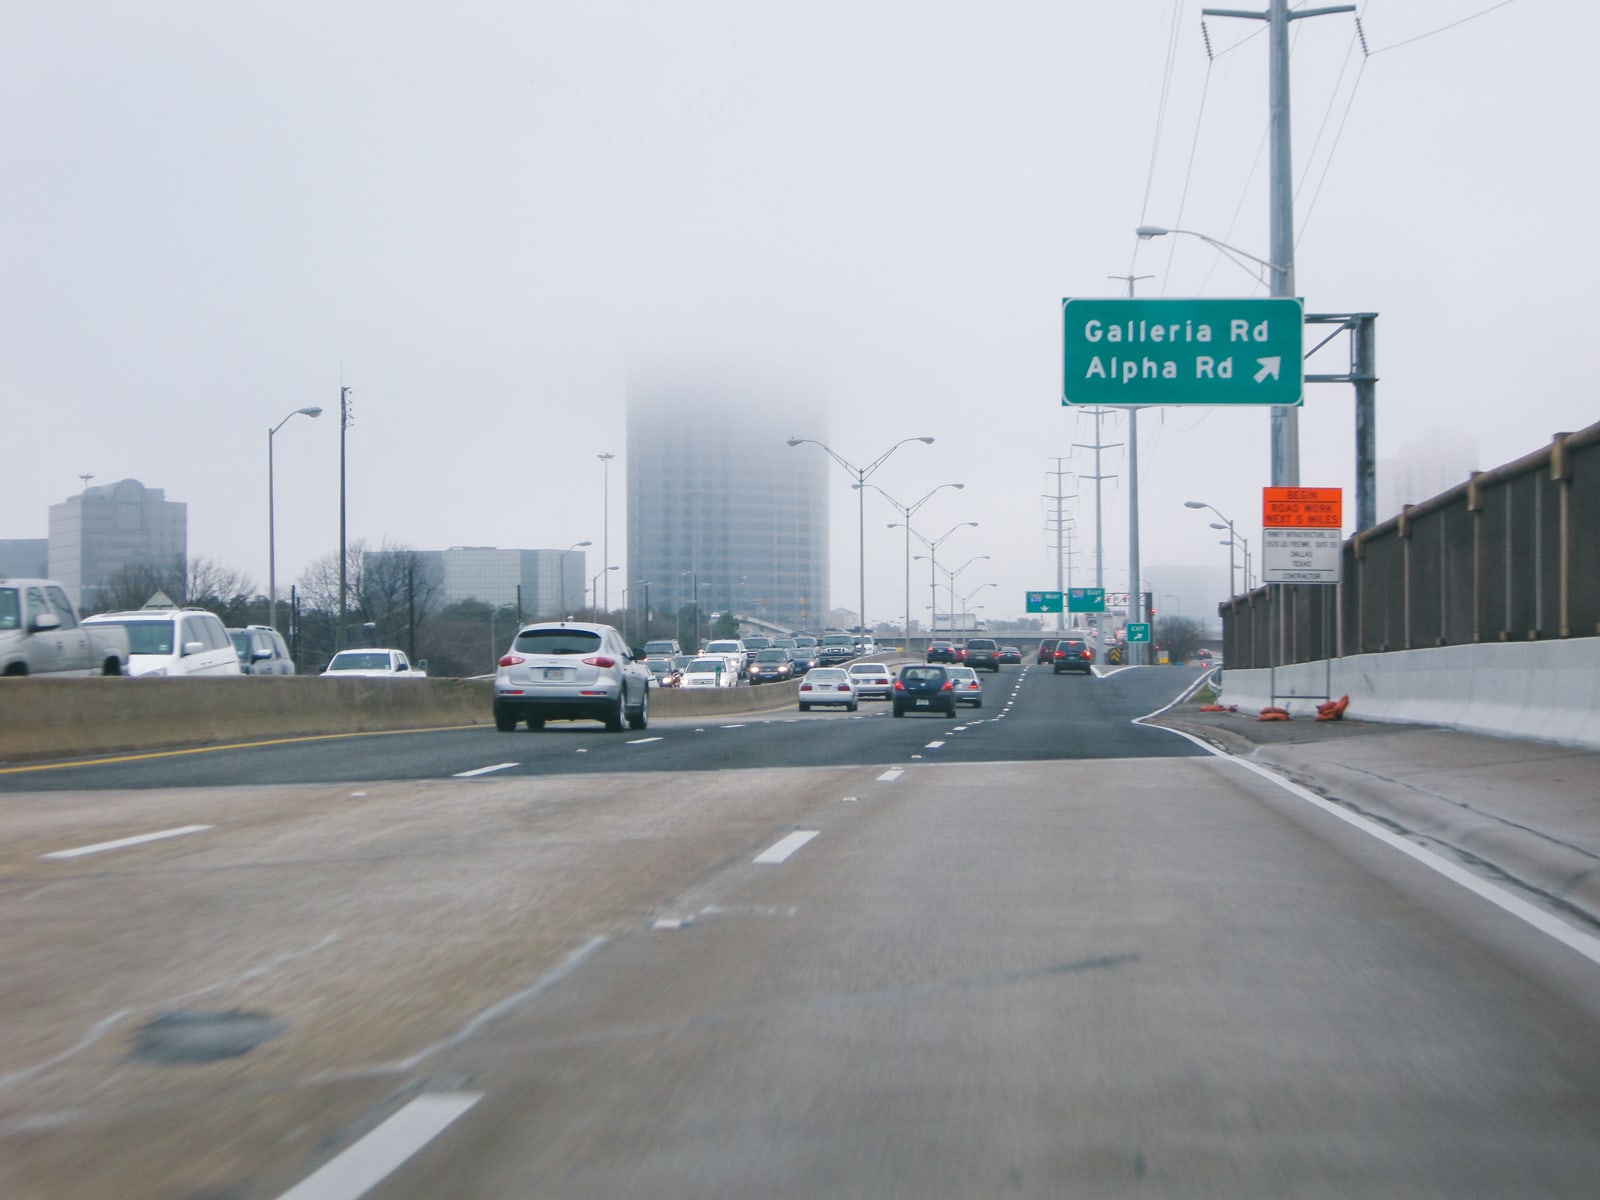 Commuting in Dallas on a foggy day